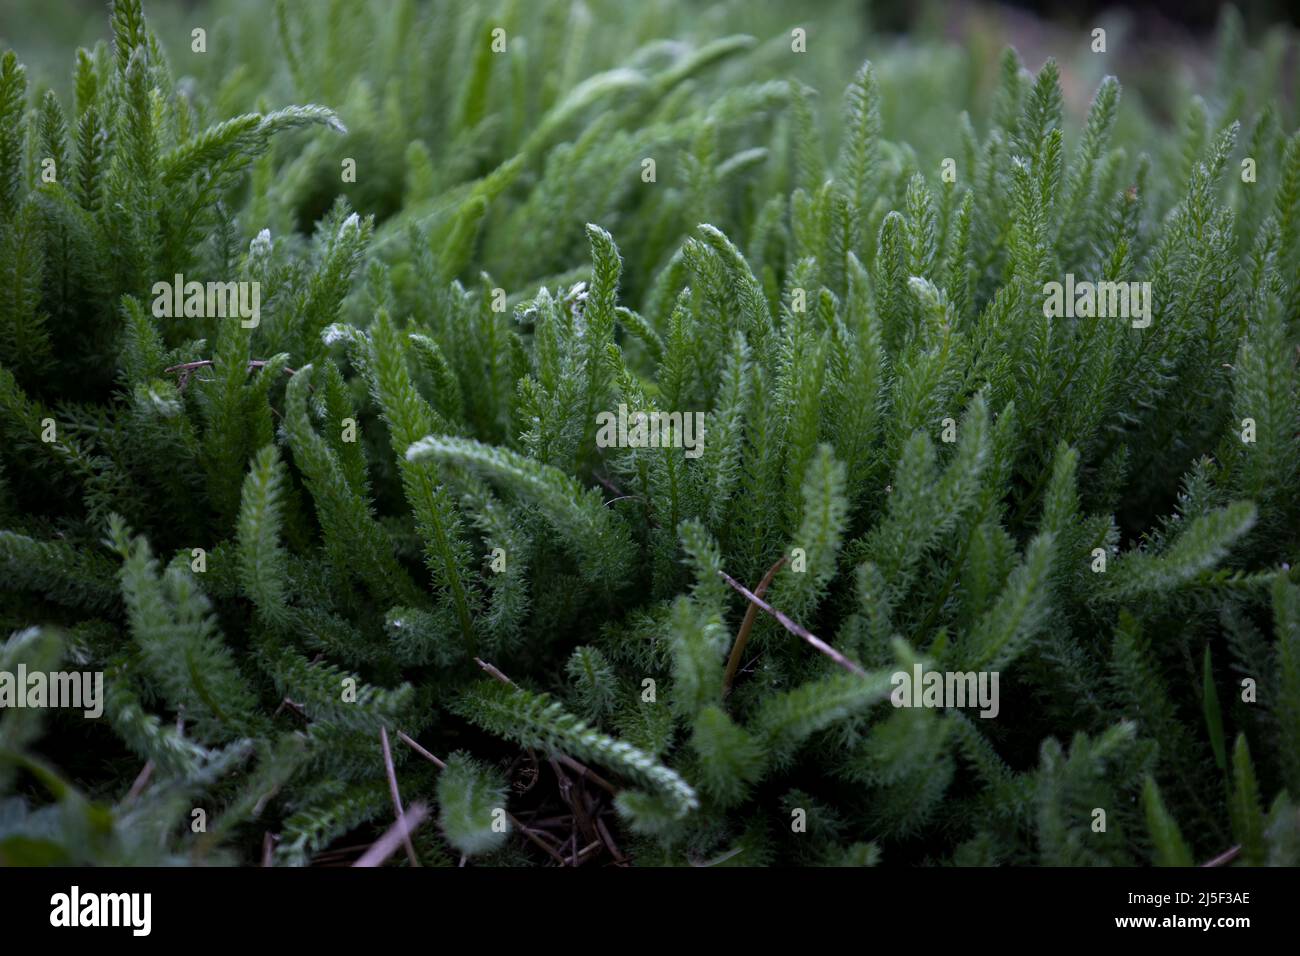 Fresh green grasses, Achillea millefolium common yarrow stems close up Stock Photo